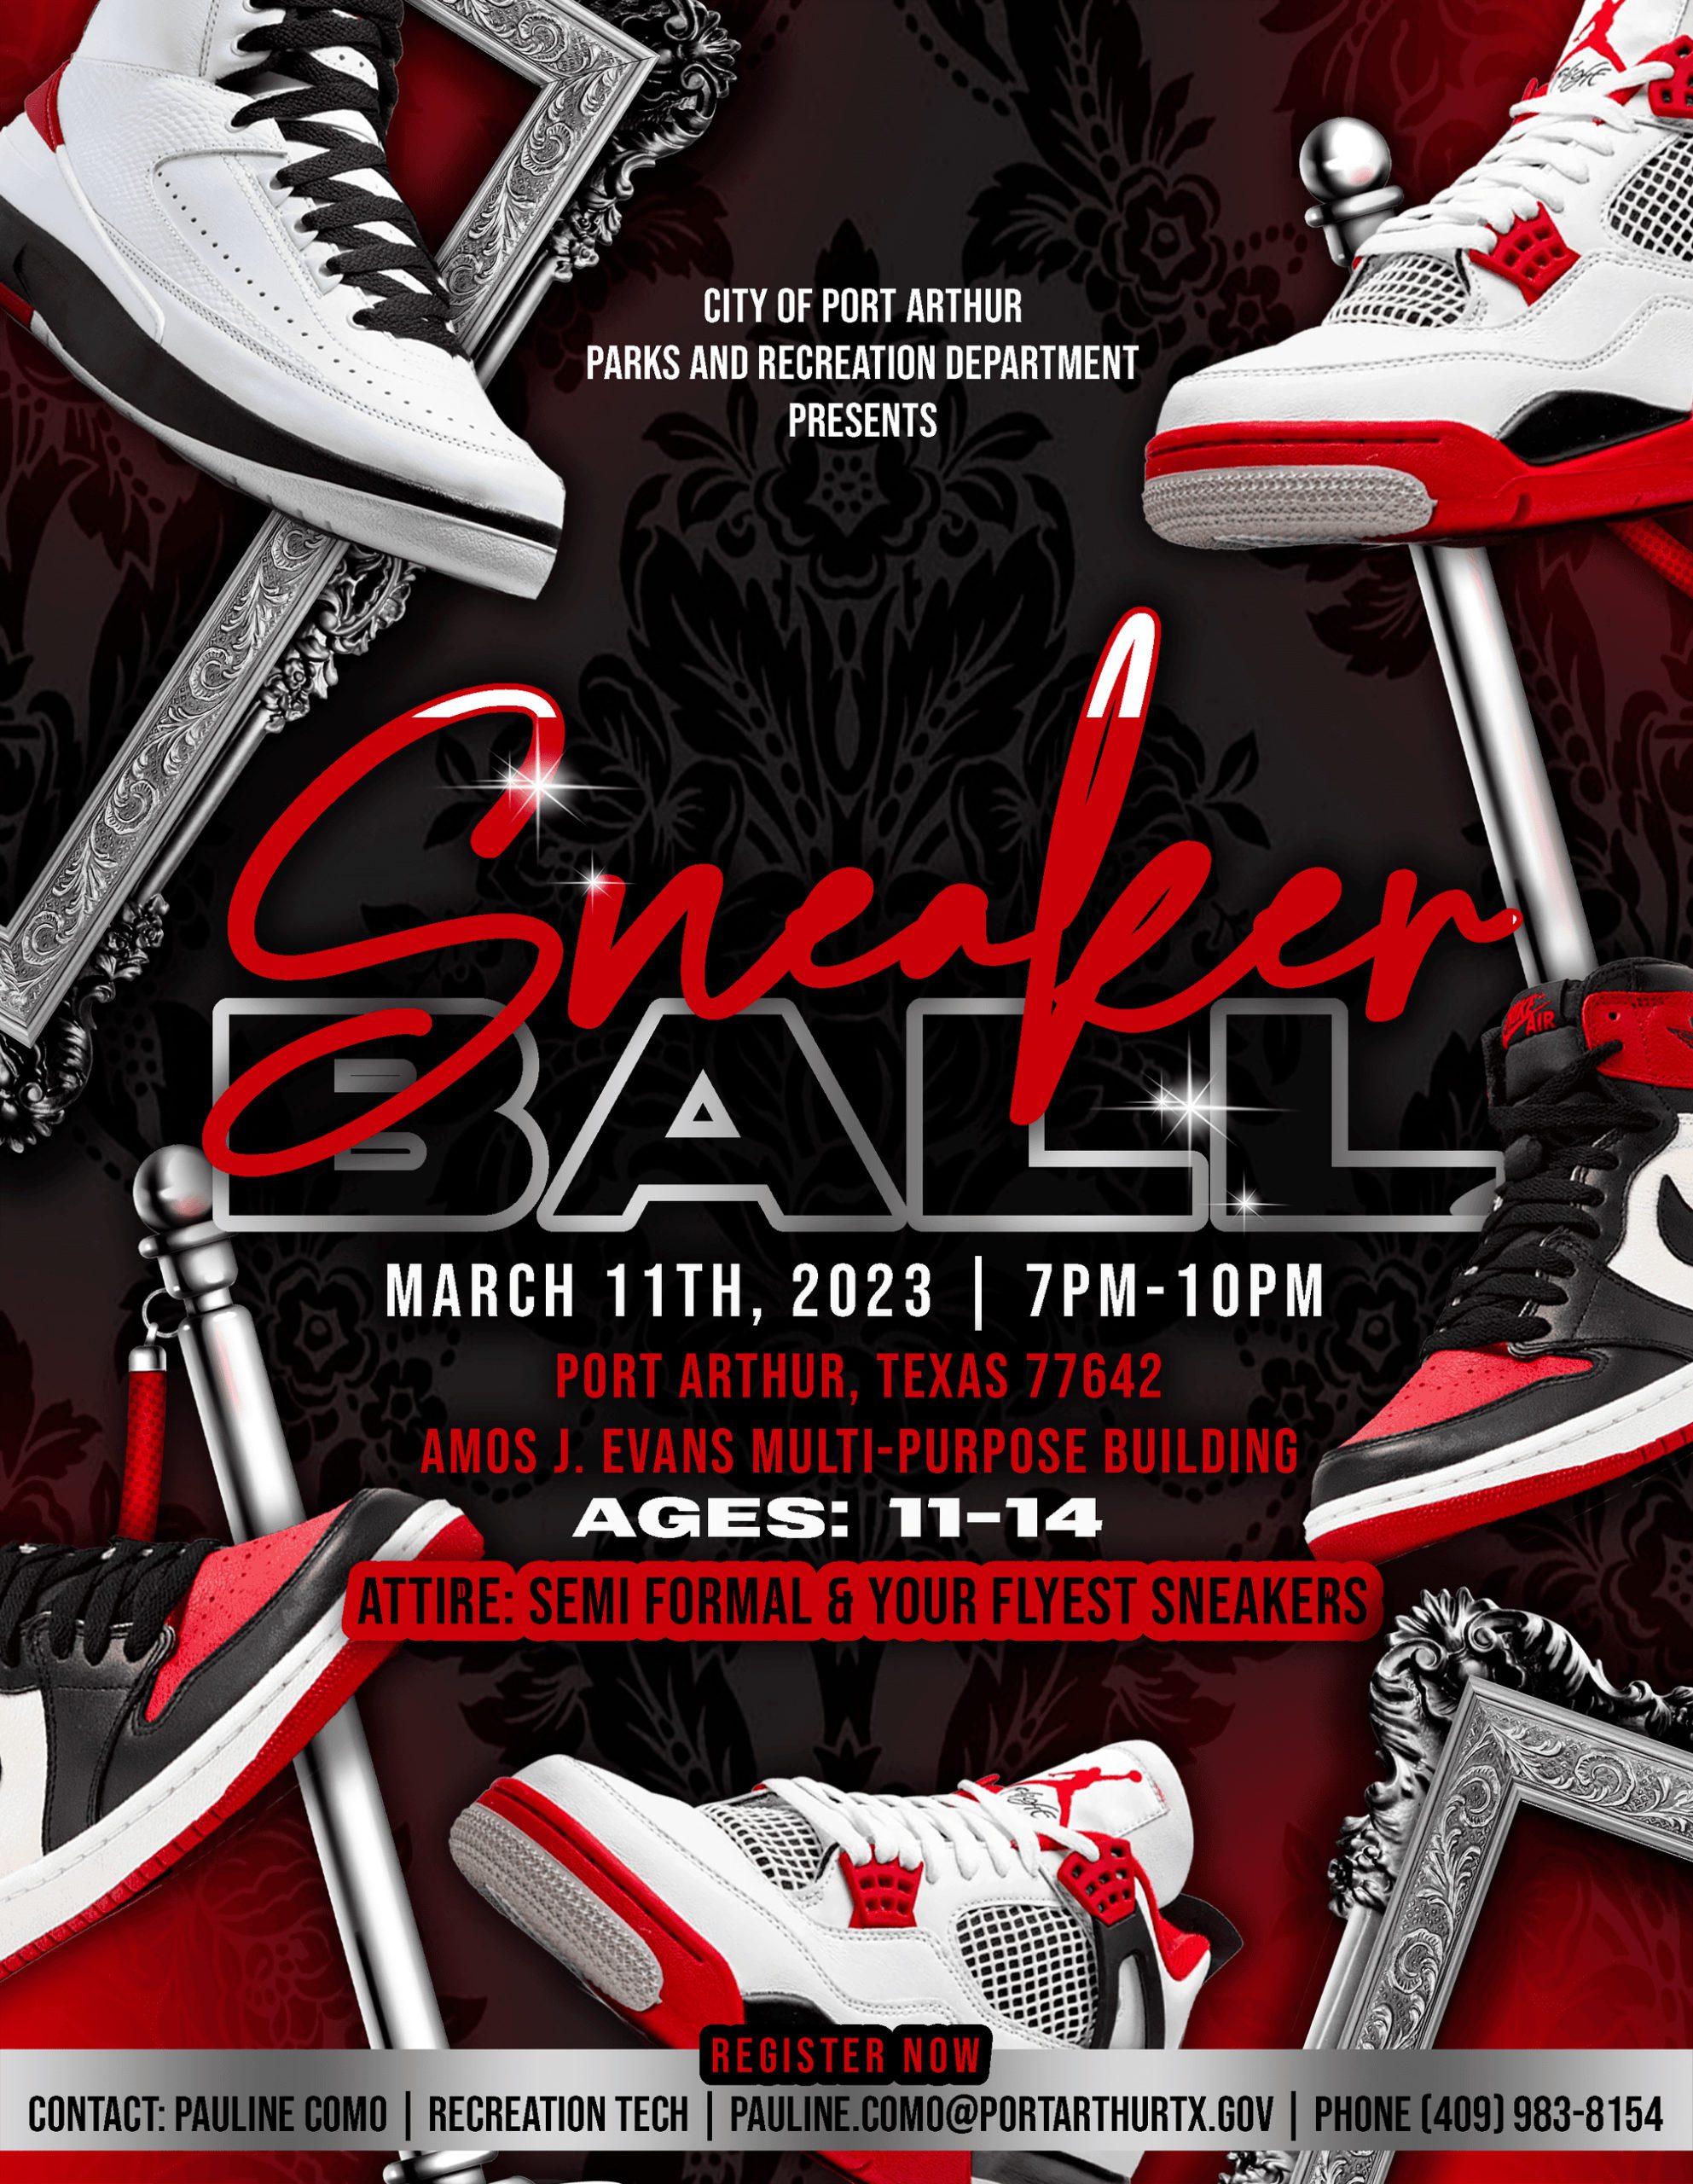 Sneaker Ball flyer for an event in Port Arthur Texas